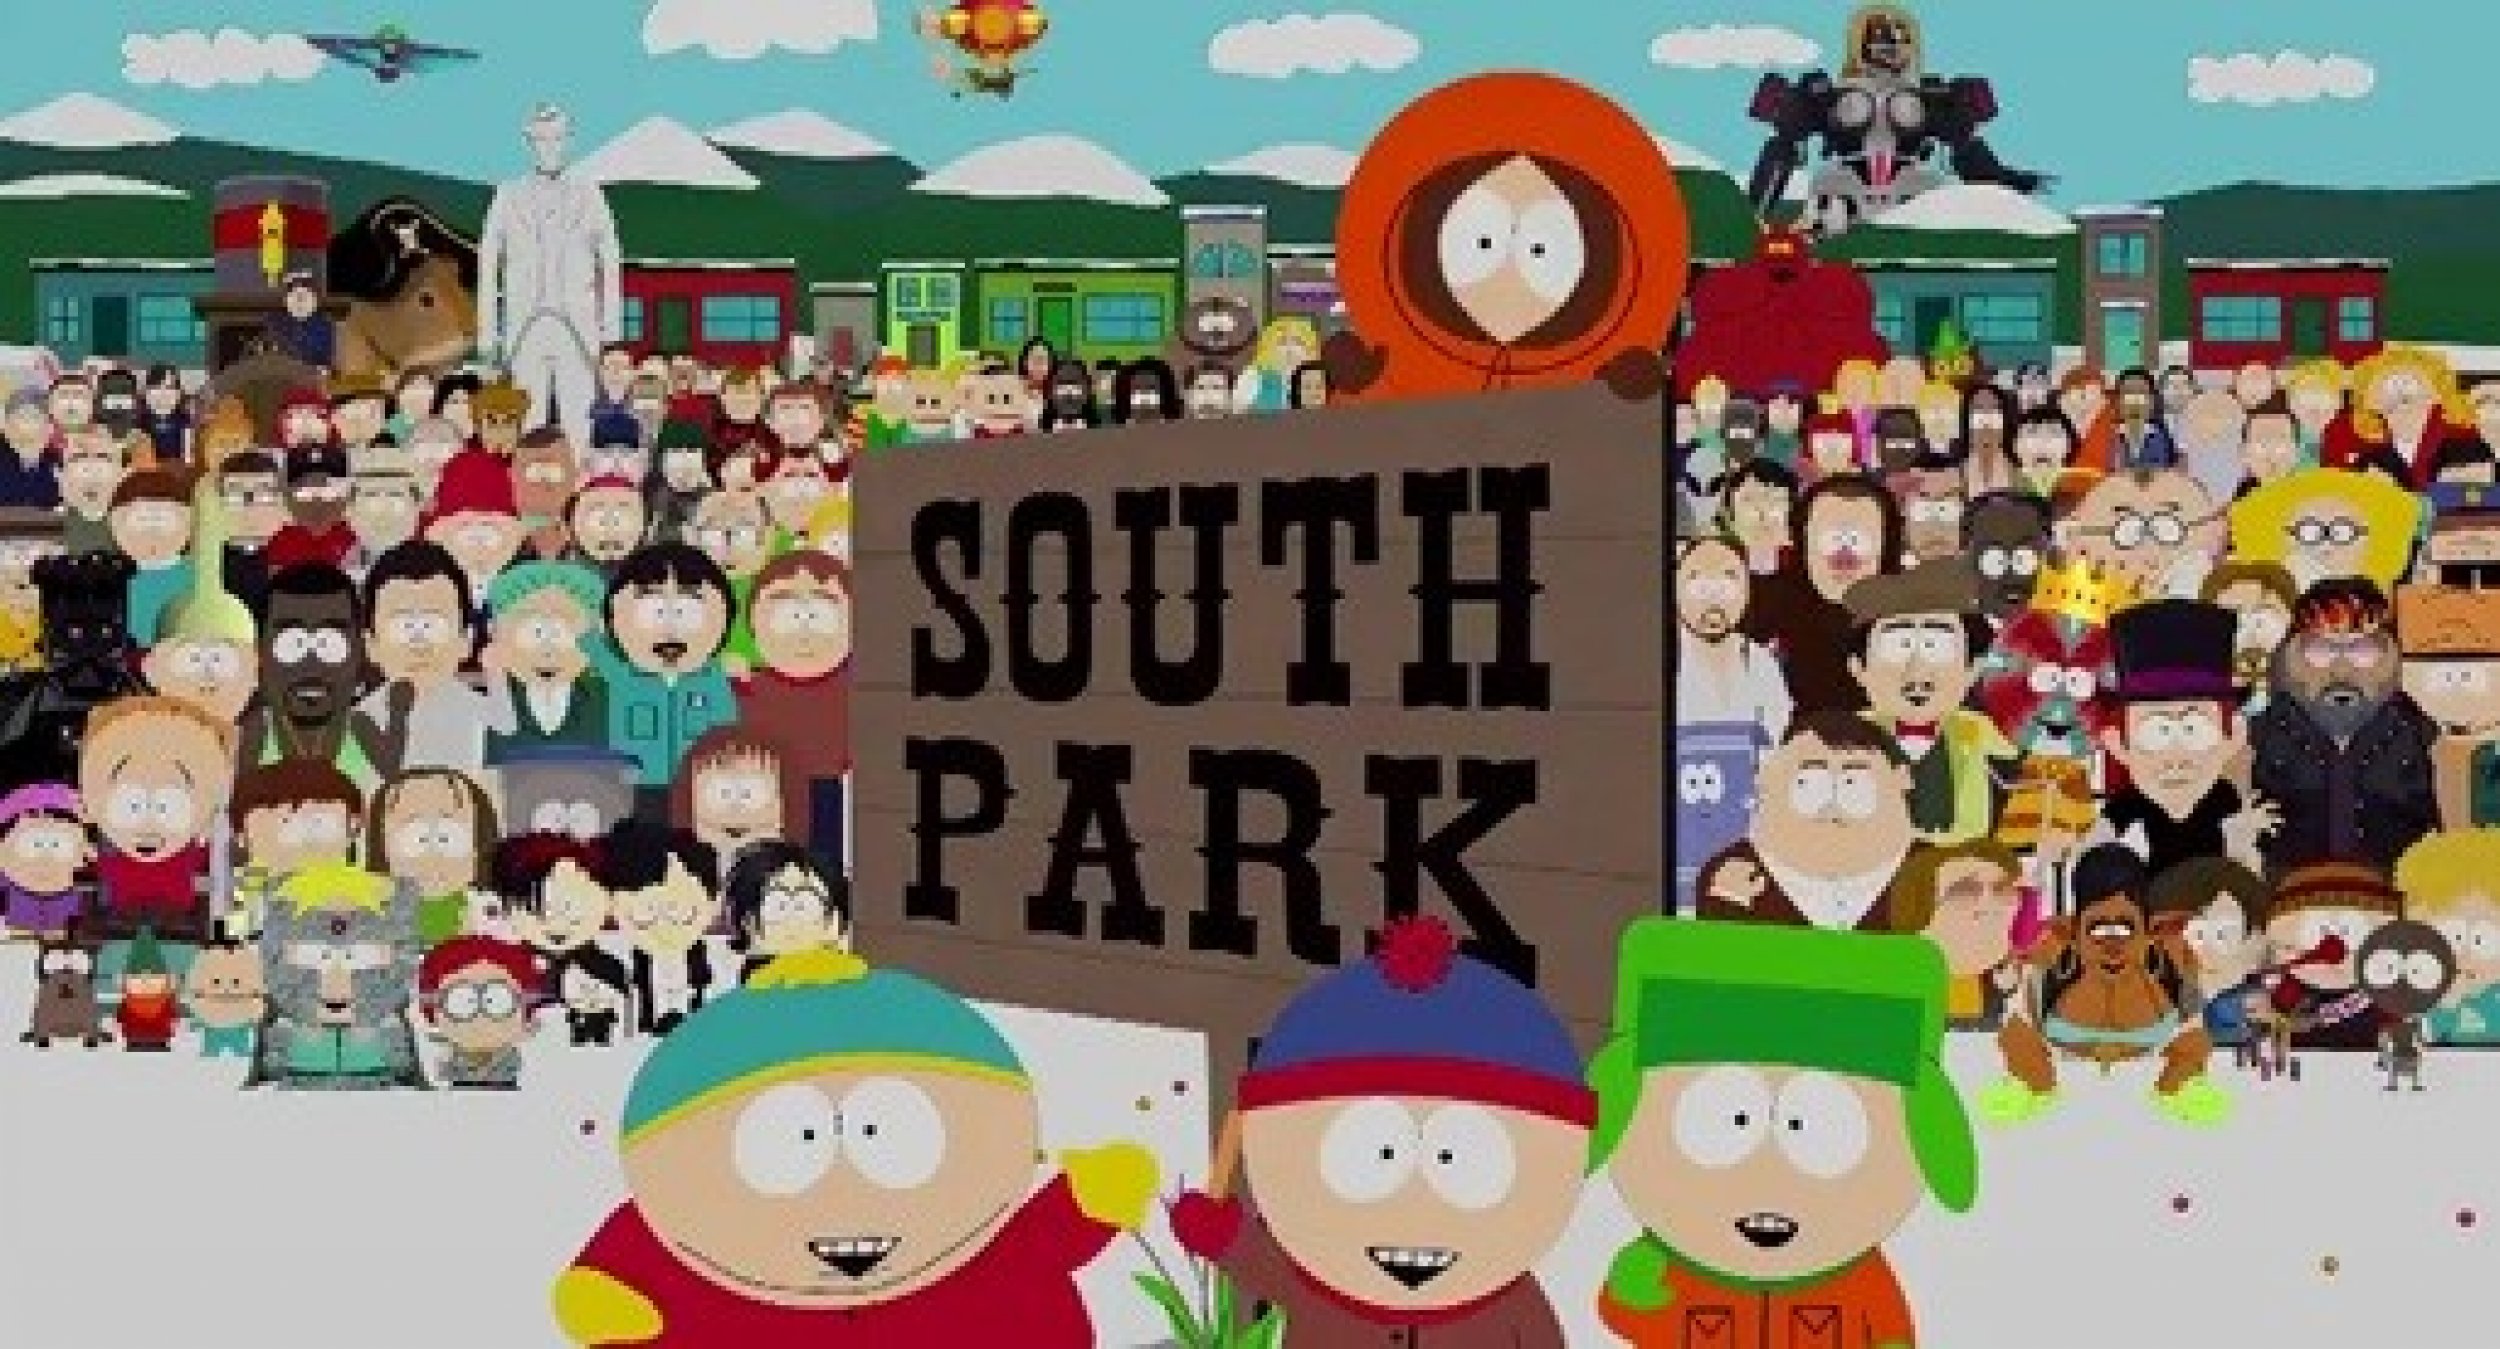 South Park New Episode Takes On TSA, Toilet Seat Gender War [VIDEO